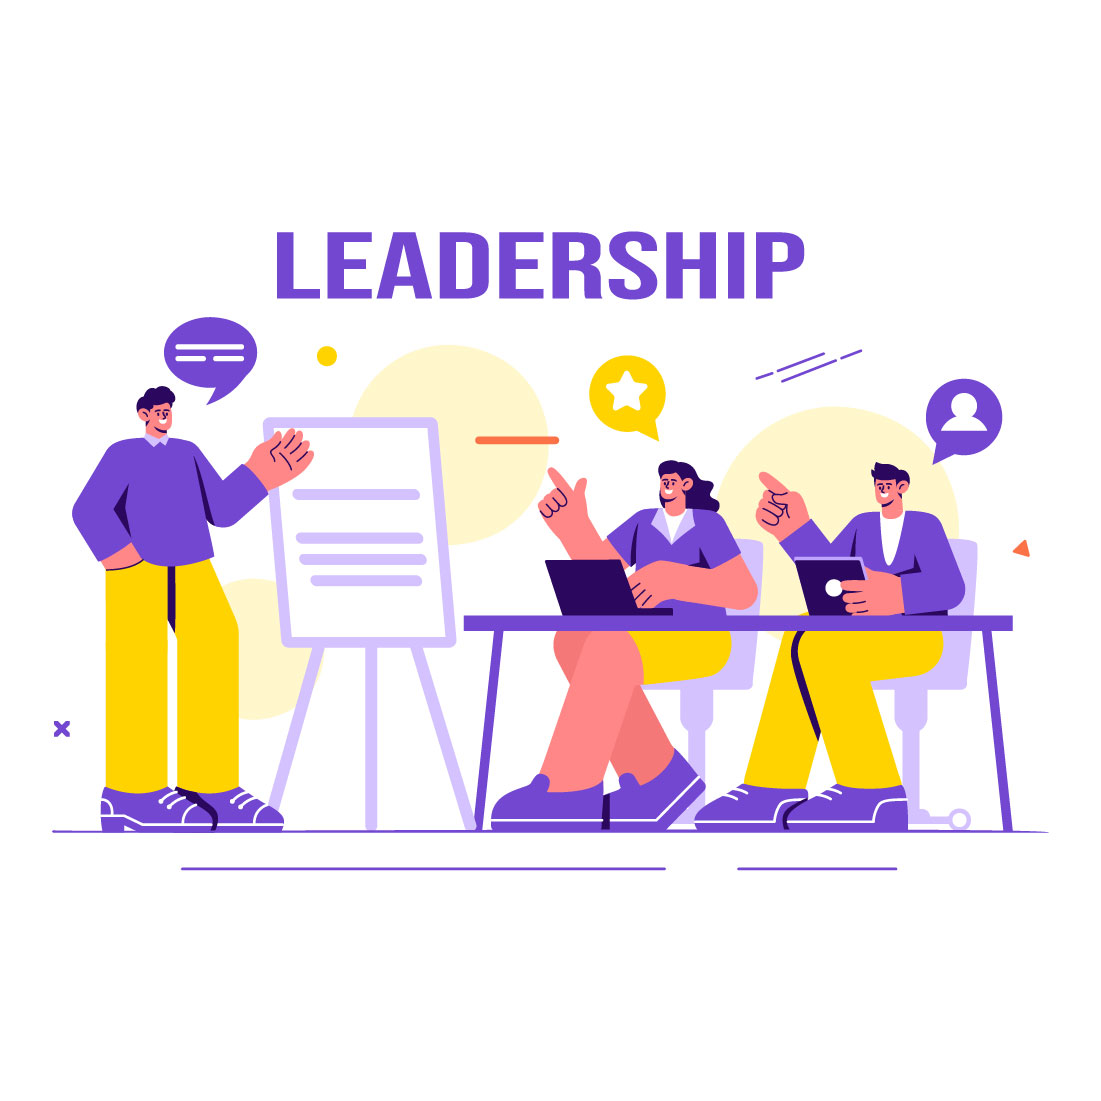 18 Business Leadership Illustration cover image.